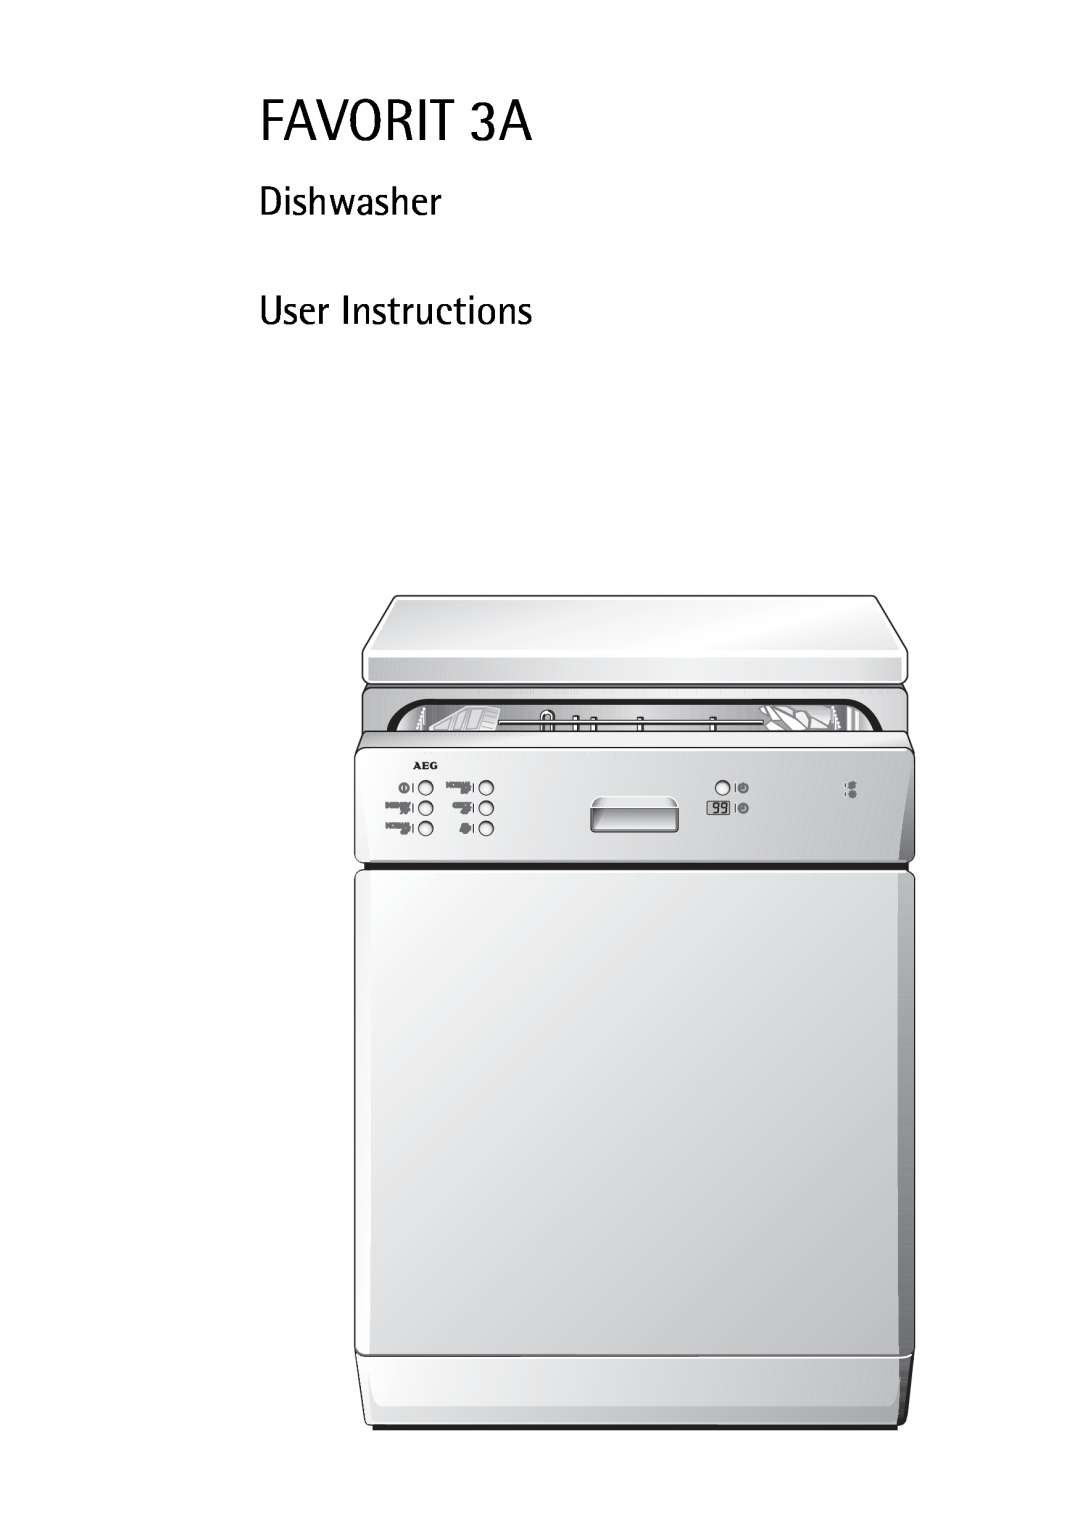 AEG manual FAVORIT 3A, Dishwasher User Instructions 